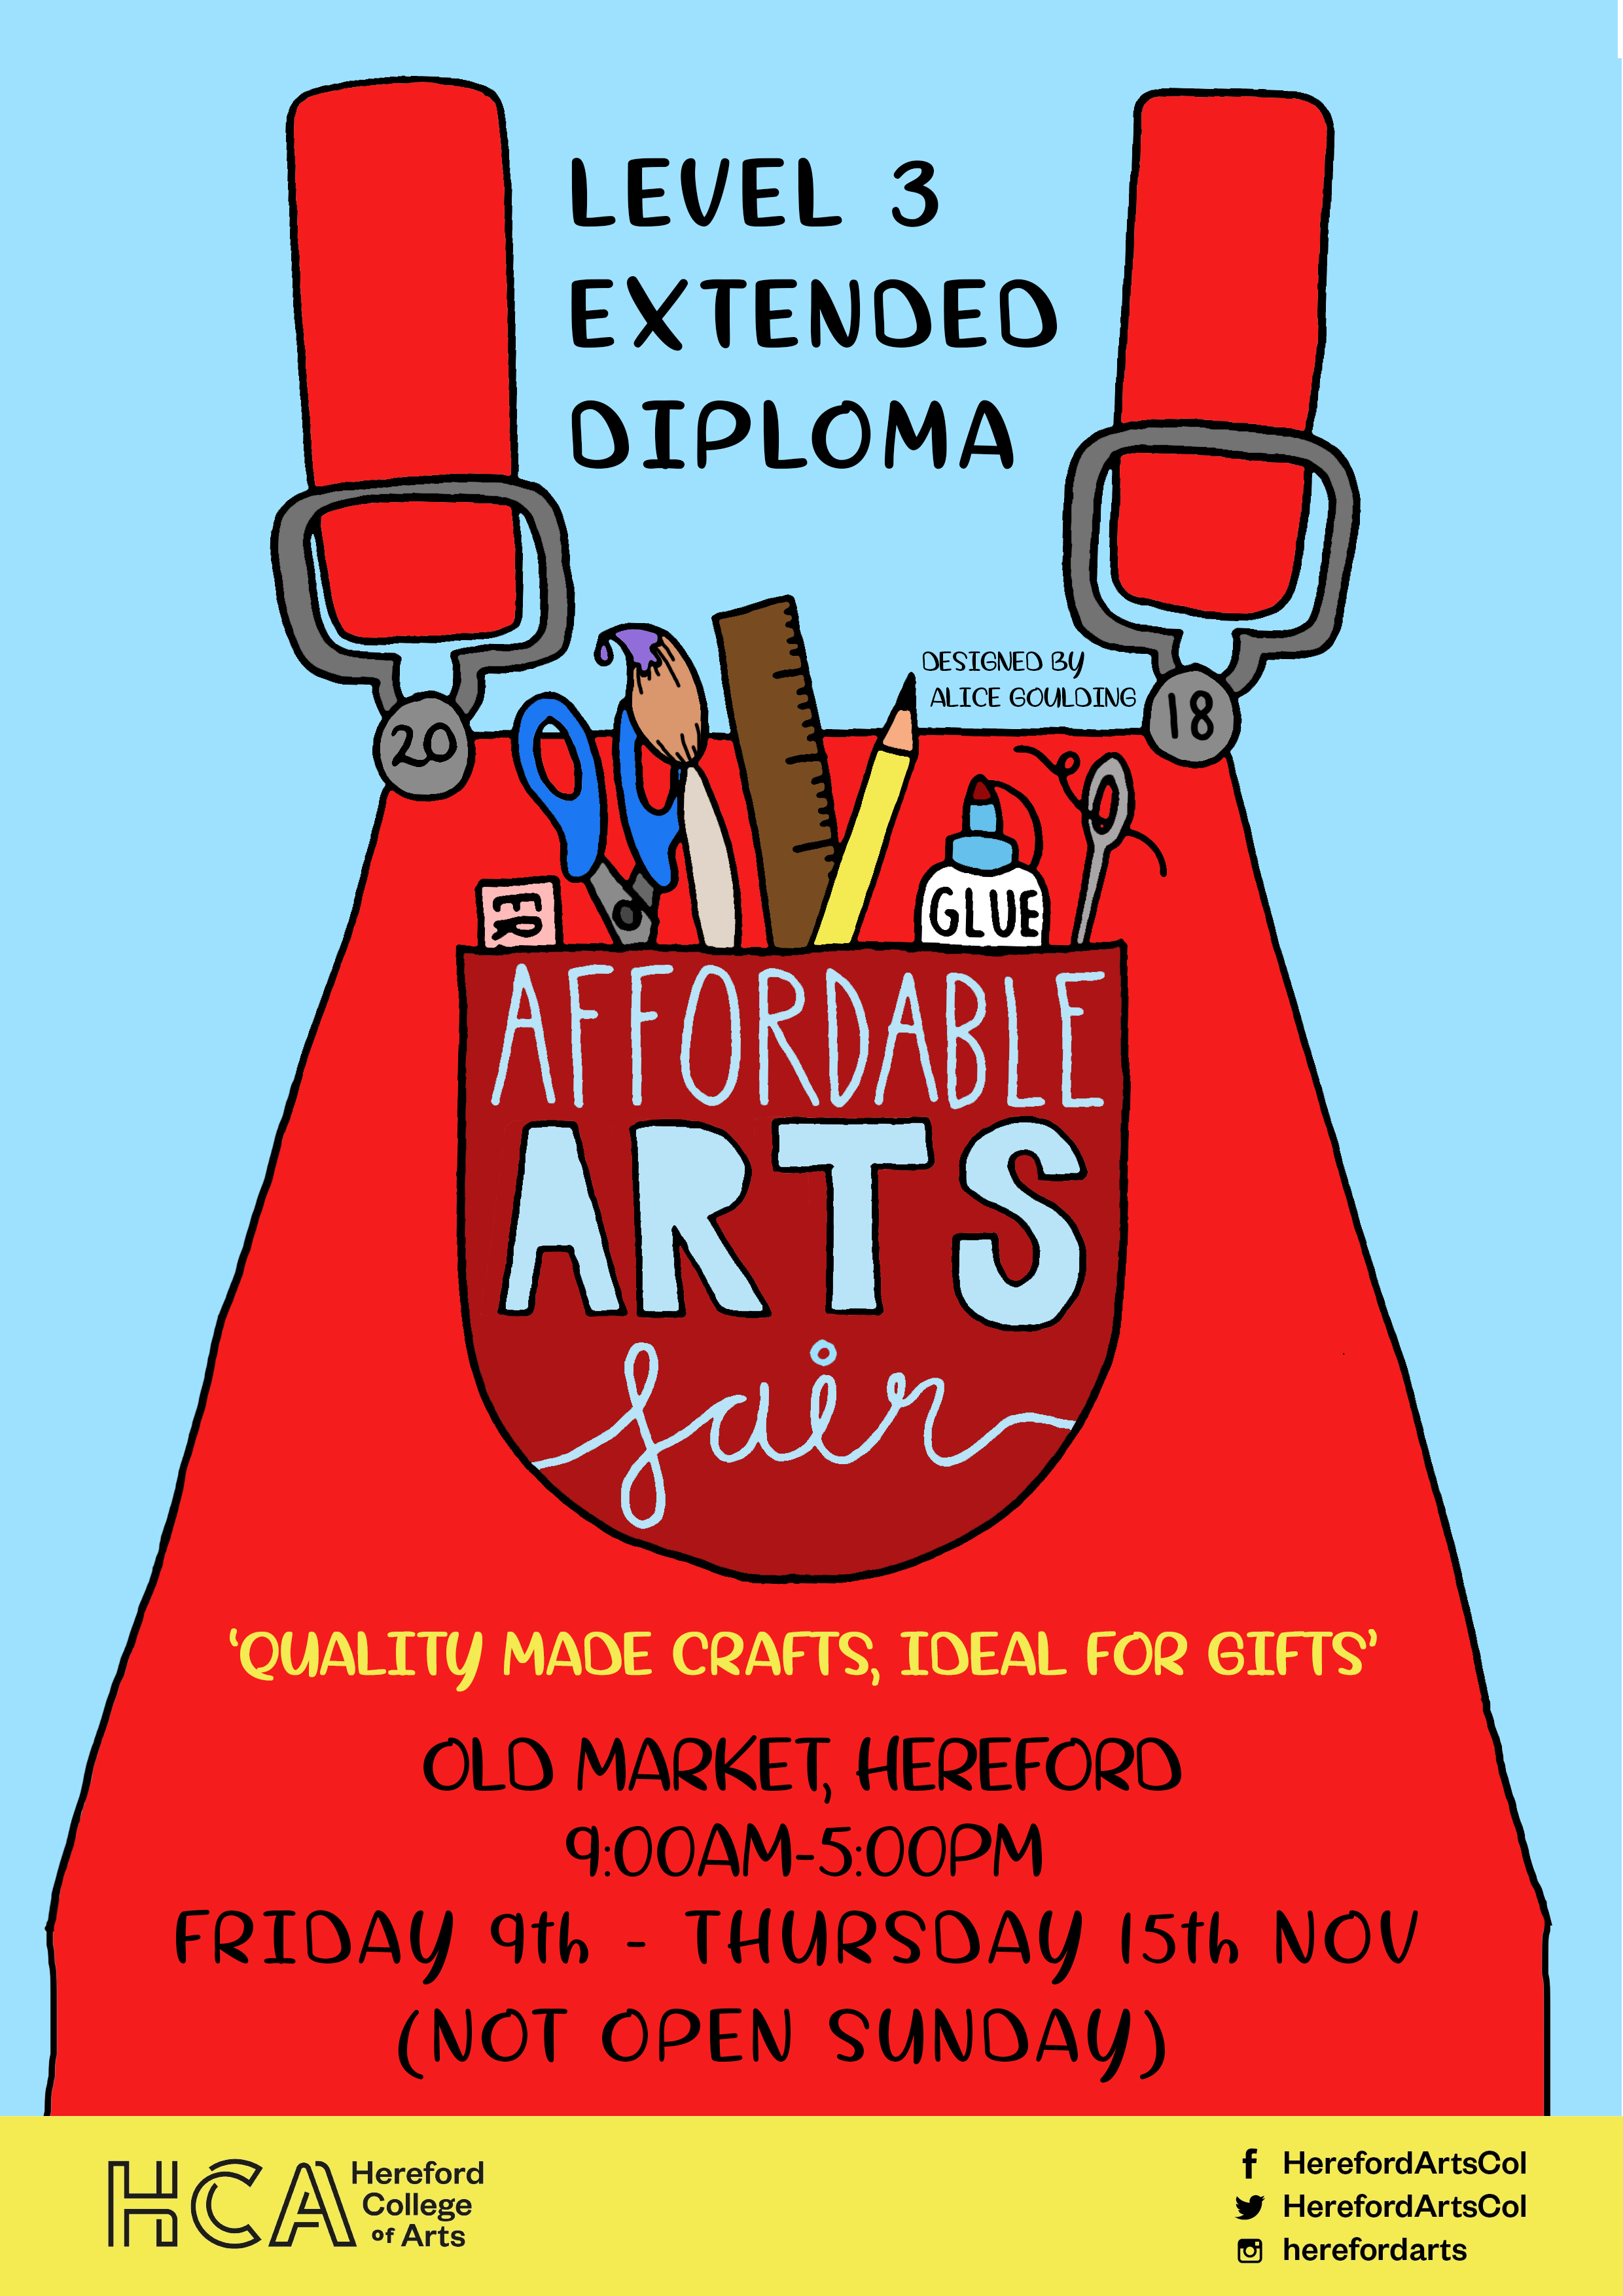 Affordable Arts Fair – Old Market